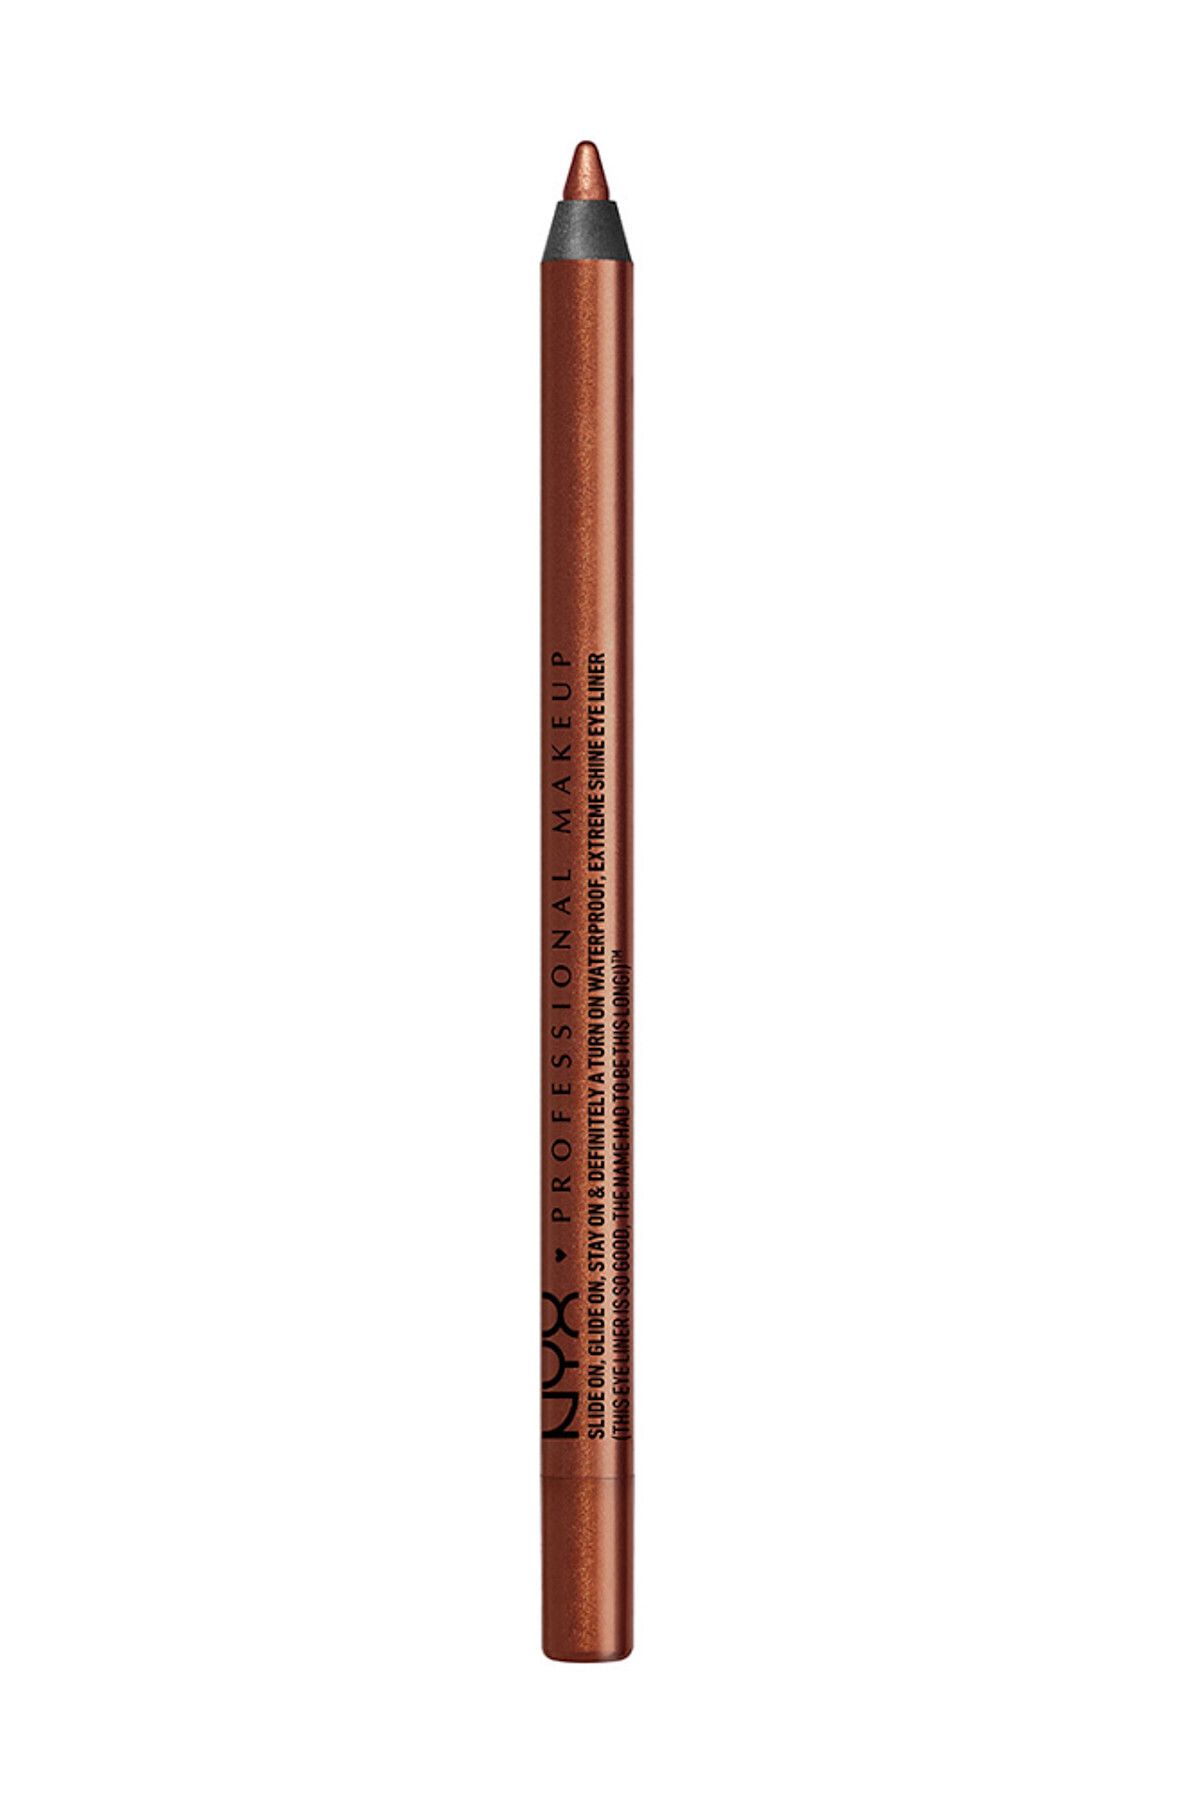 NYX Professional Makeup Bronz Göz Kalemi - Slide on Eye Pencil Golden Bronze 6 g 800897141318